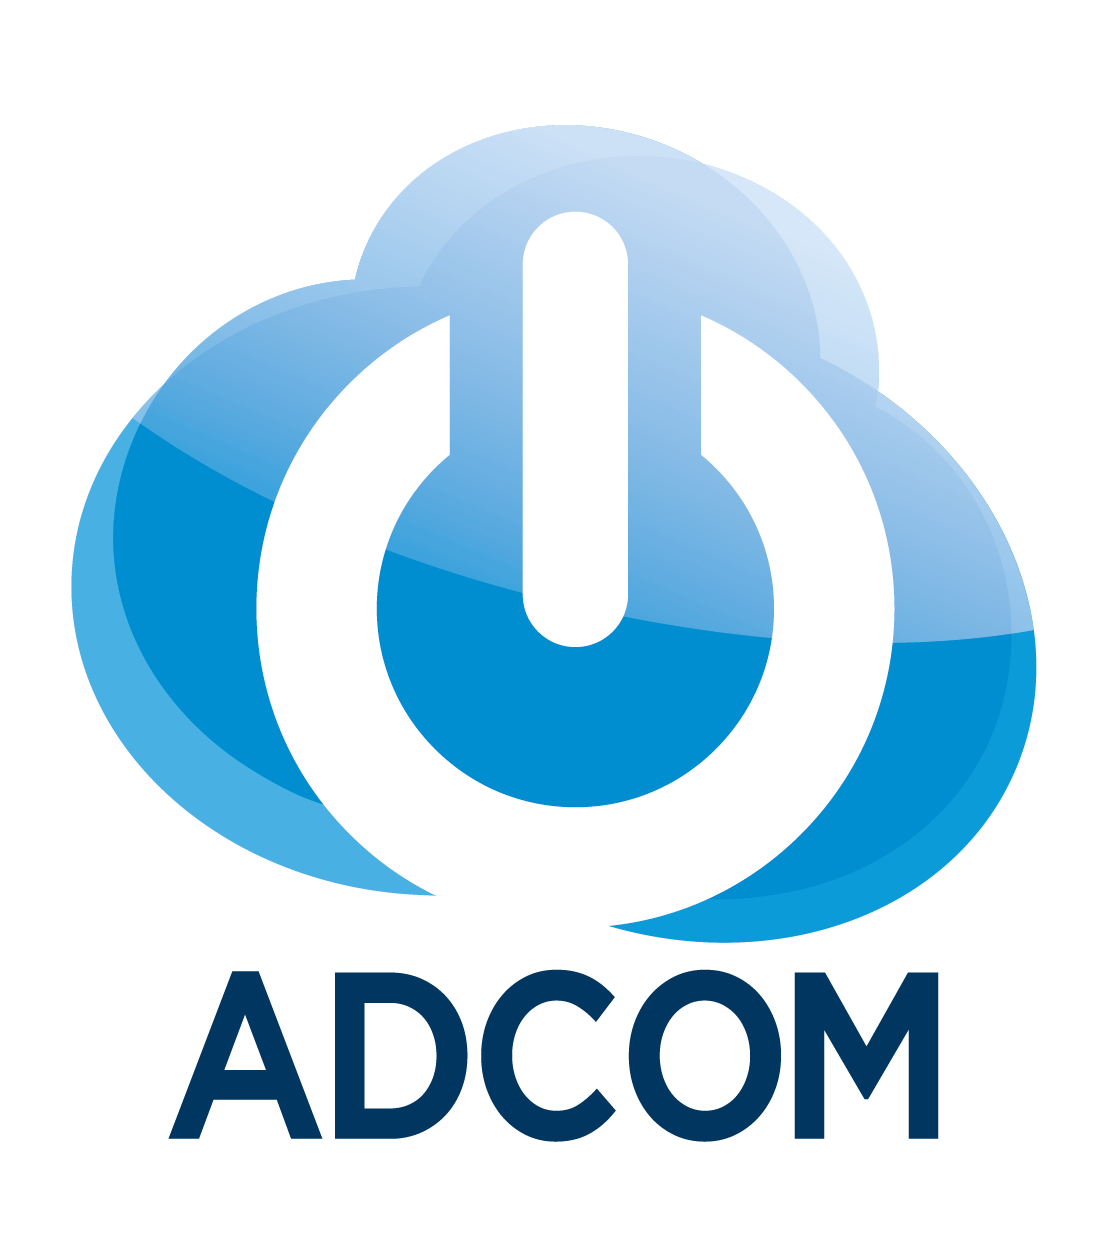 adcom computing Technology logo cloud blue button interactivity Accessibility